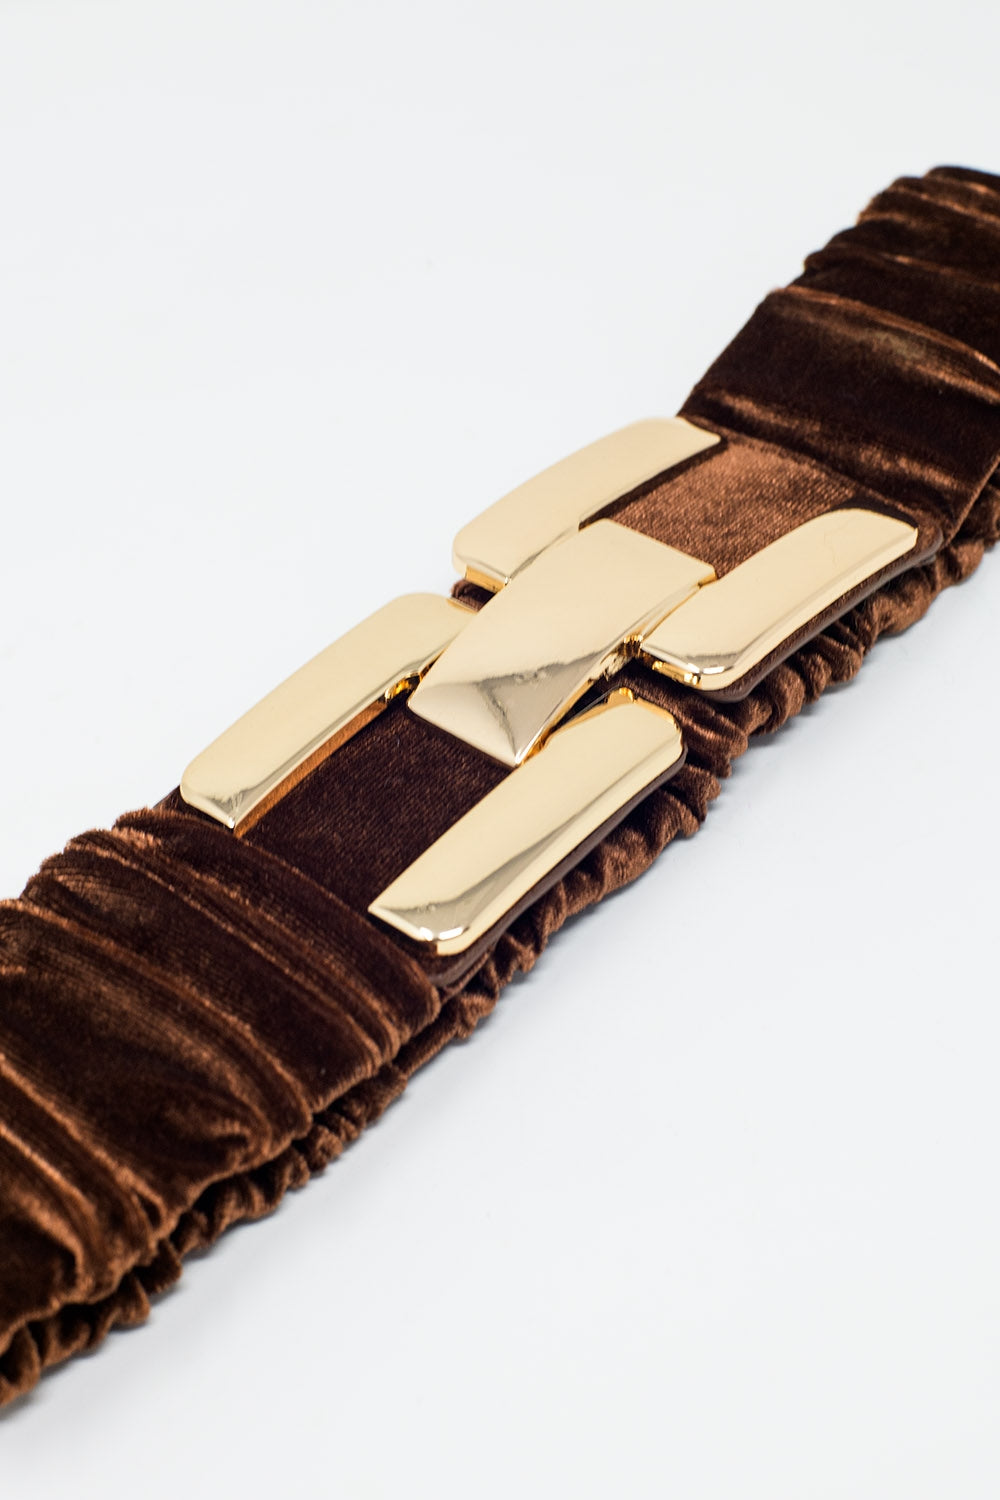 Cintura in velluto elastico marrone con chiusura in metallo